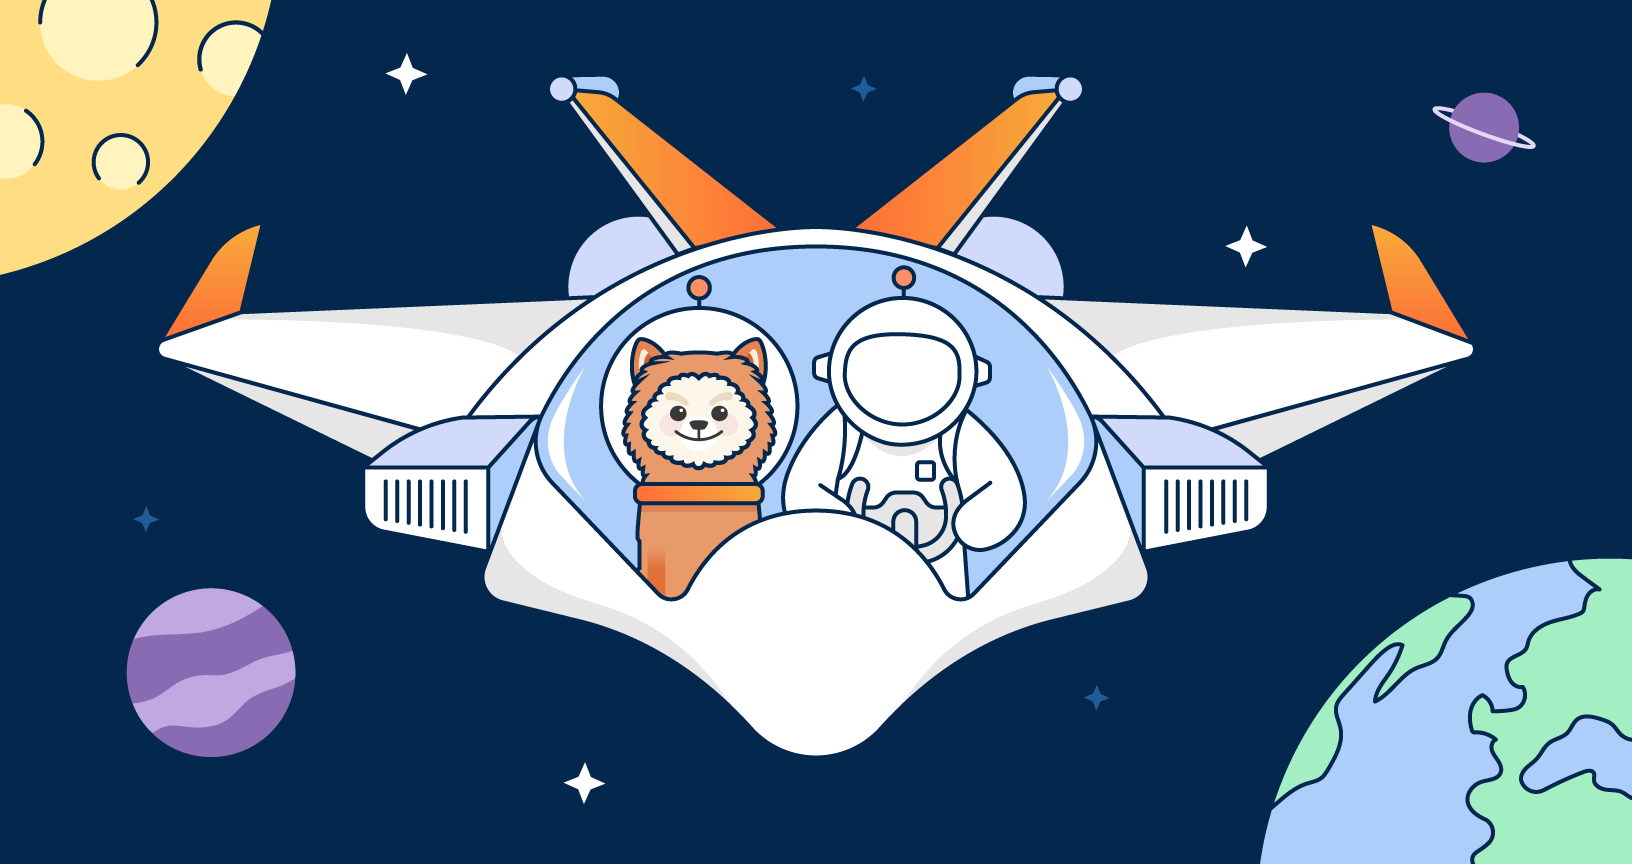 Postmanaut flying with Akita mascot. illustration.